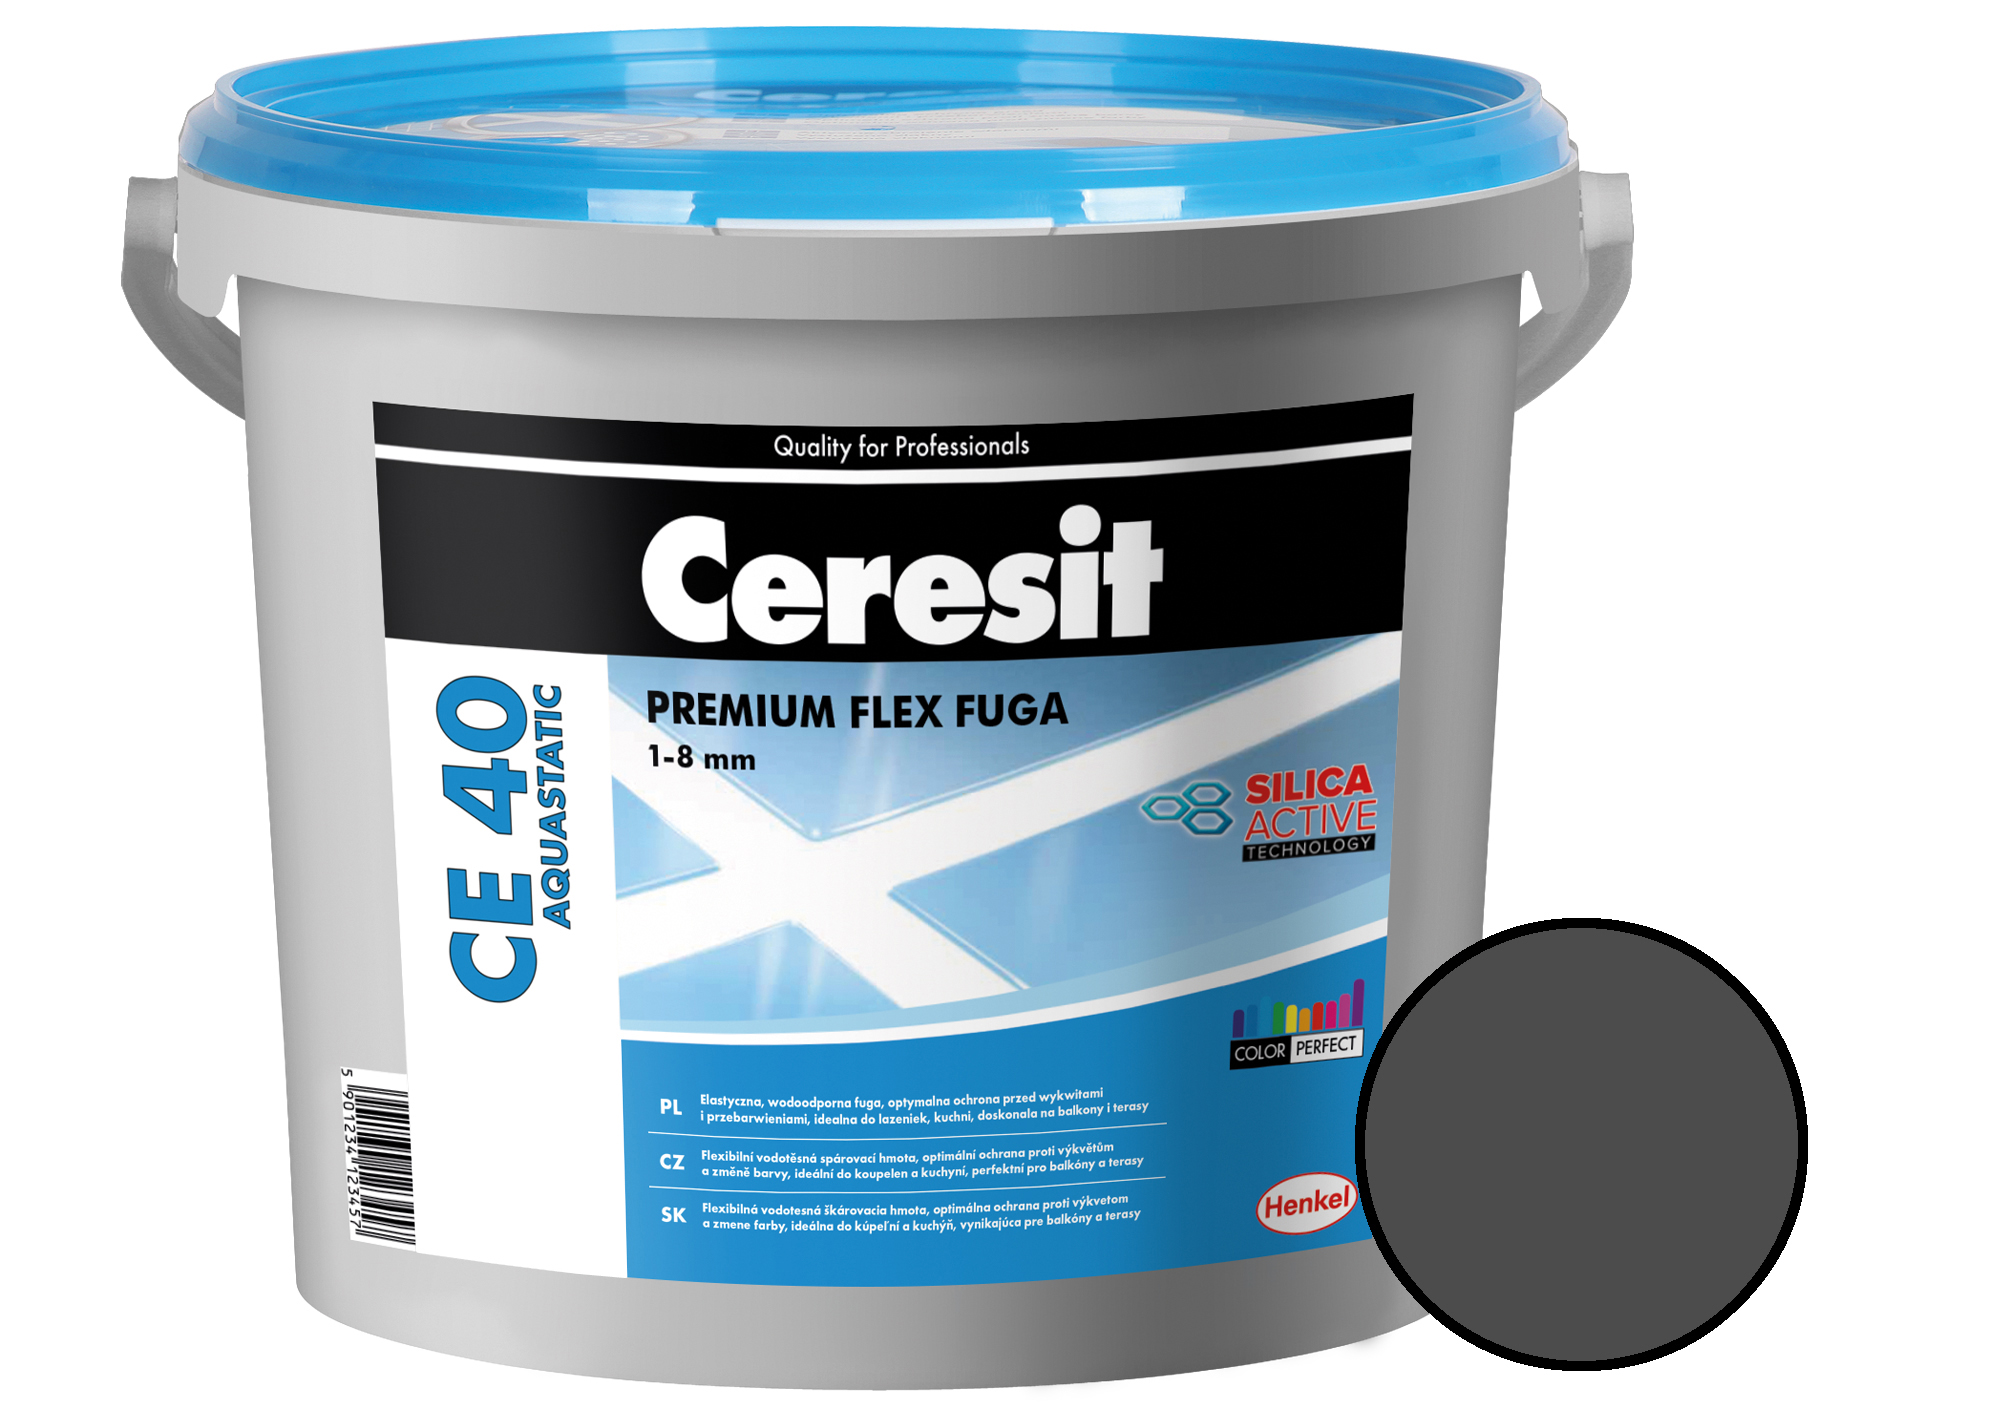 Hmota spárovací Ceresit CE 40 Aquastatic graphite 5 kg